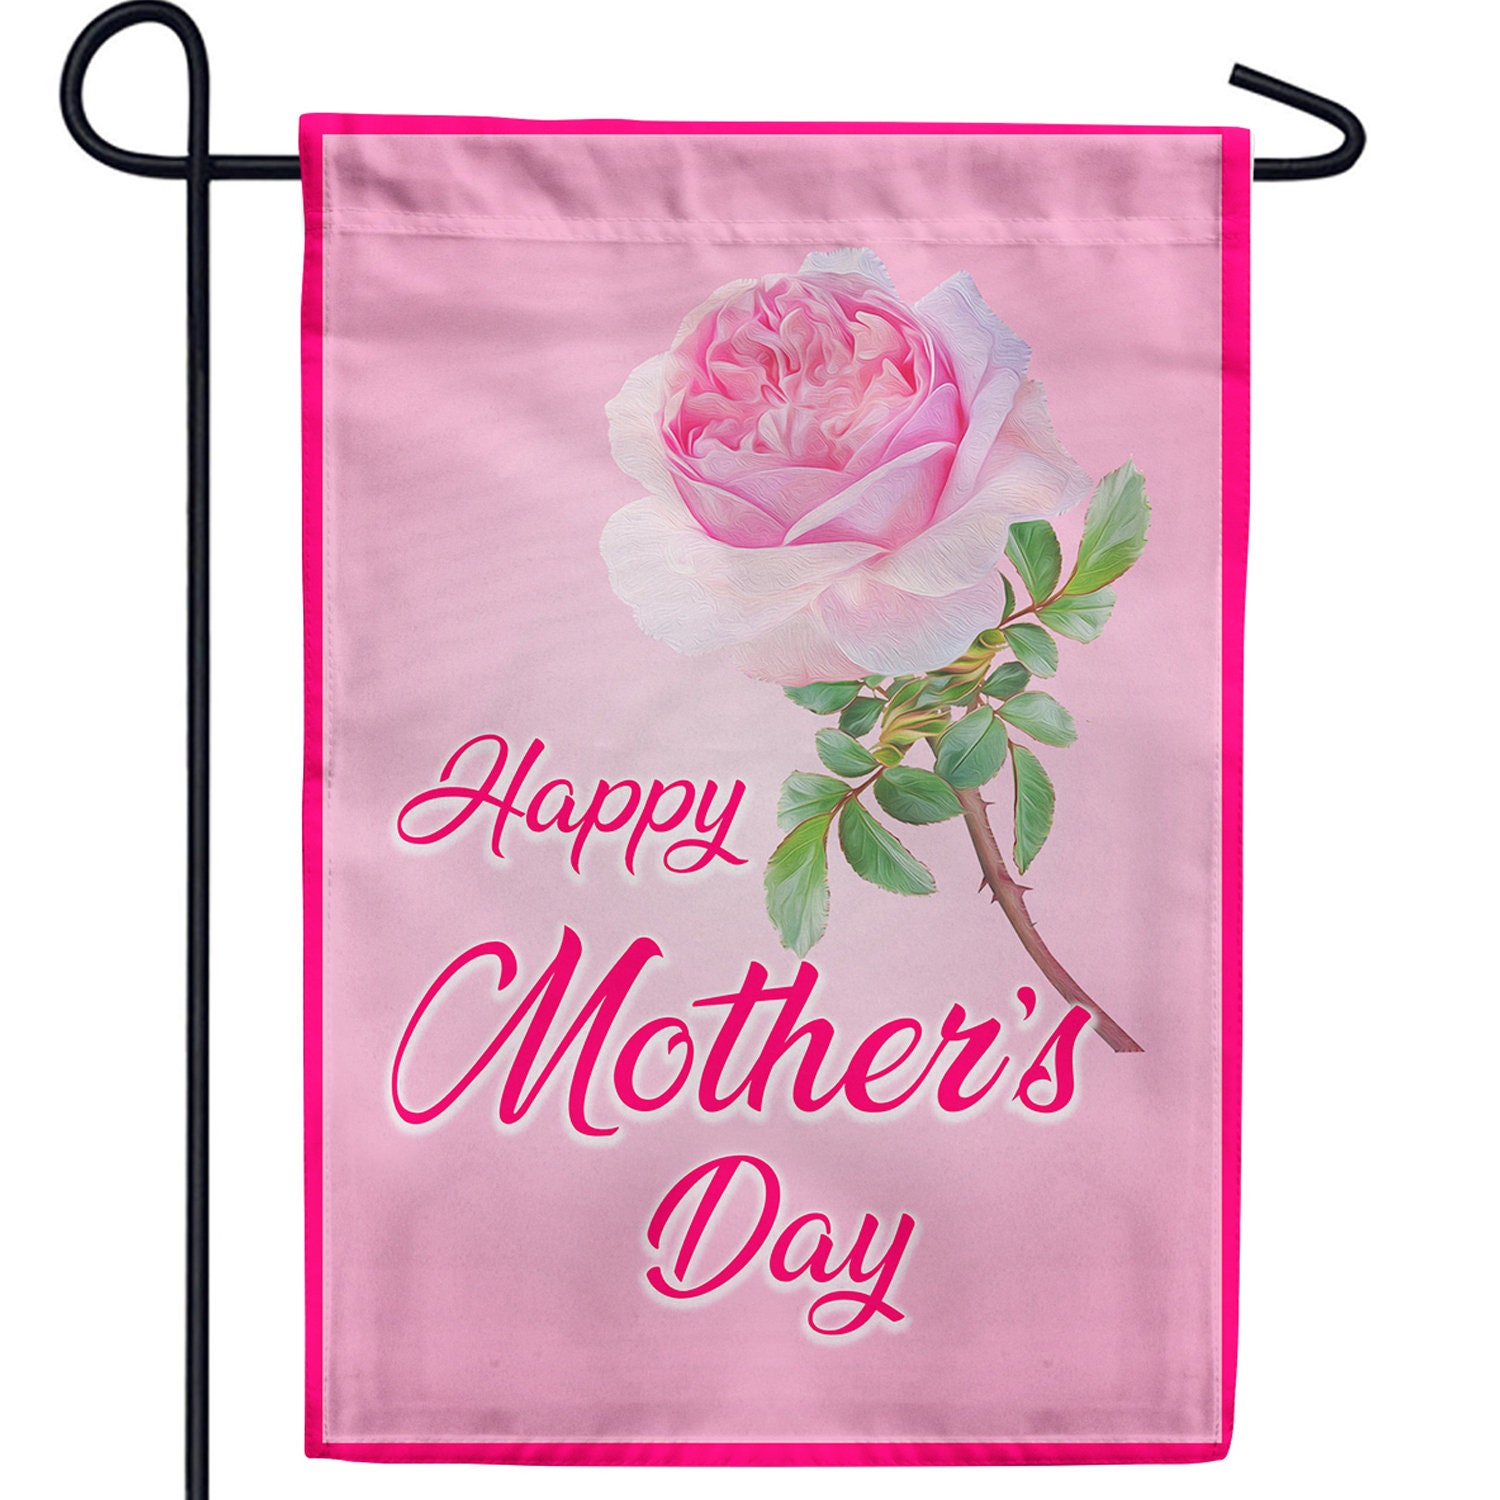 Happy Mother's Day Garden Flag